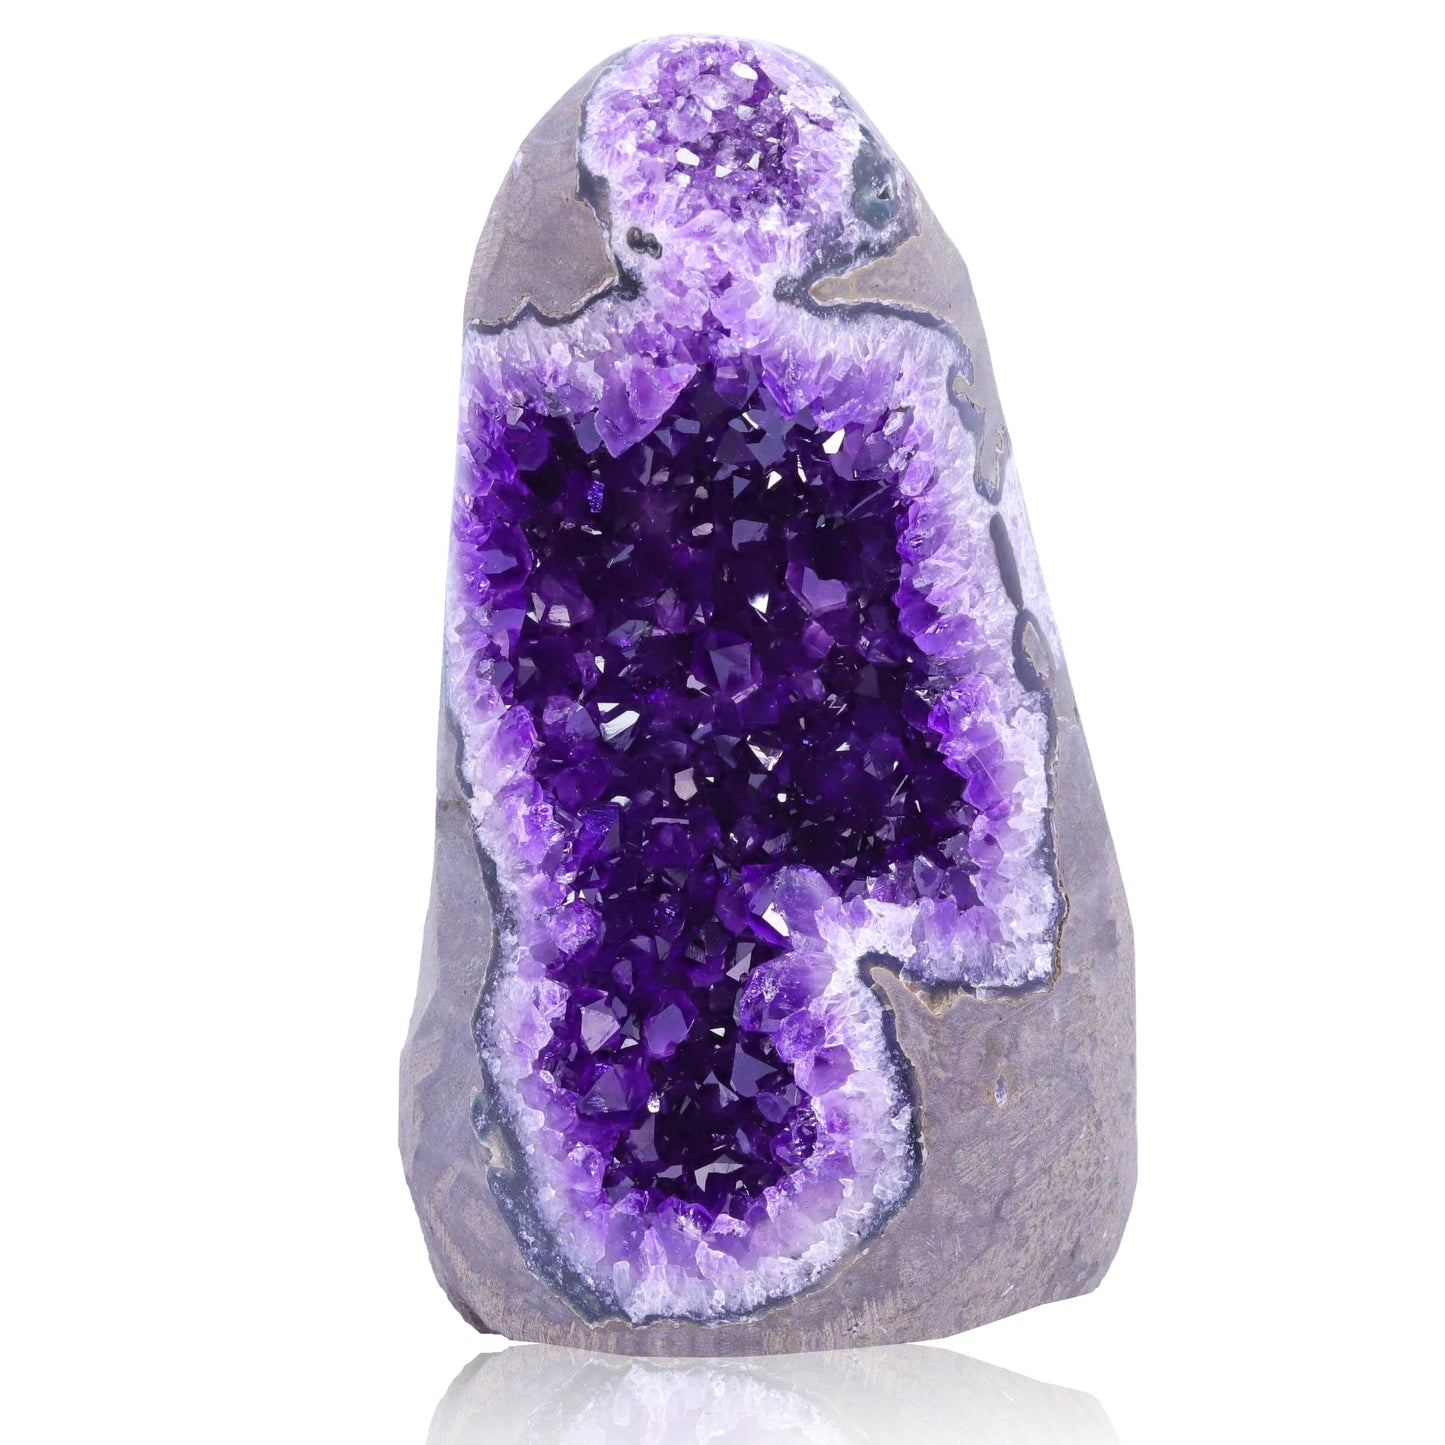 Natuurlijke rauwe amethist geode Purple Crystal Quartz Cluster Dream Energy Healing Thunder Egg Groothandel Home Decoratie